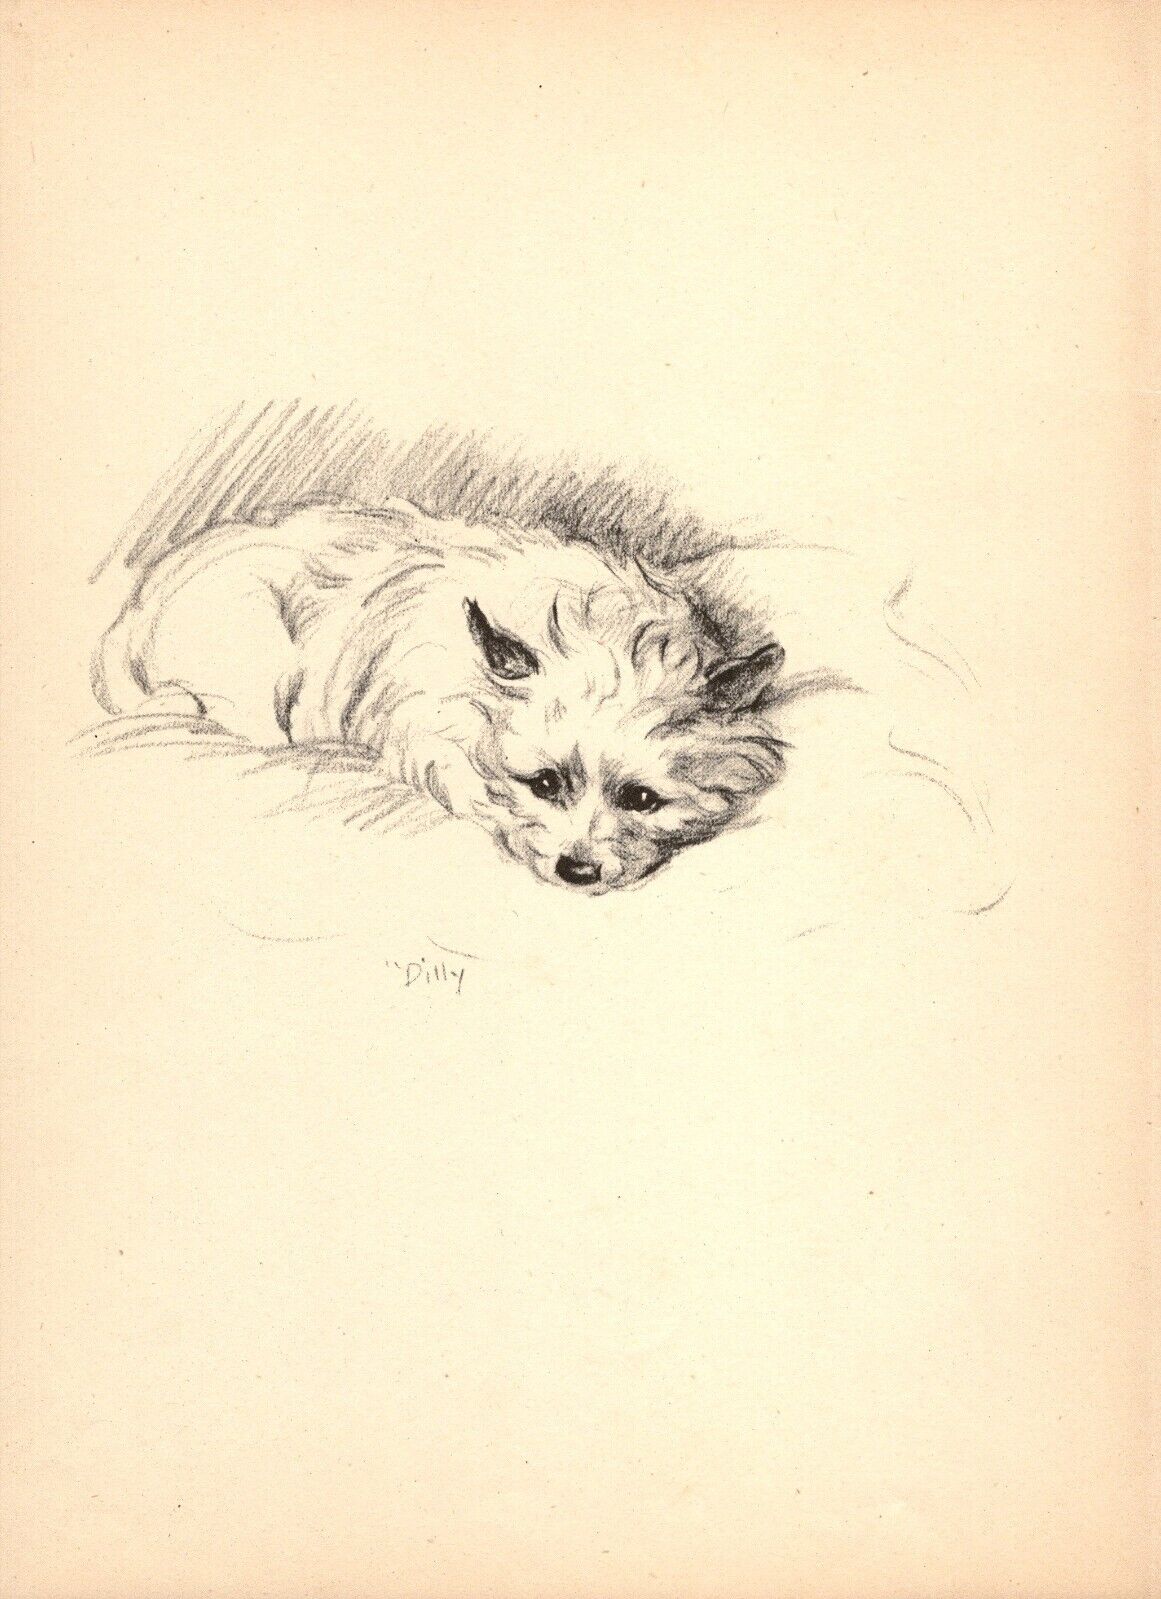 1940s Vintage Cairn Terrier Print Wall Art Decor Lucy Dawson Illustration 5433c